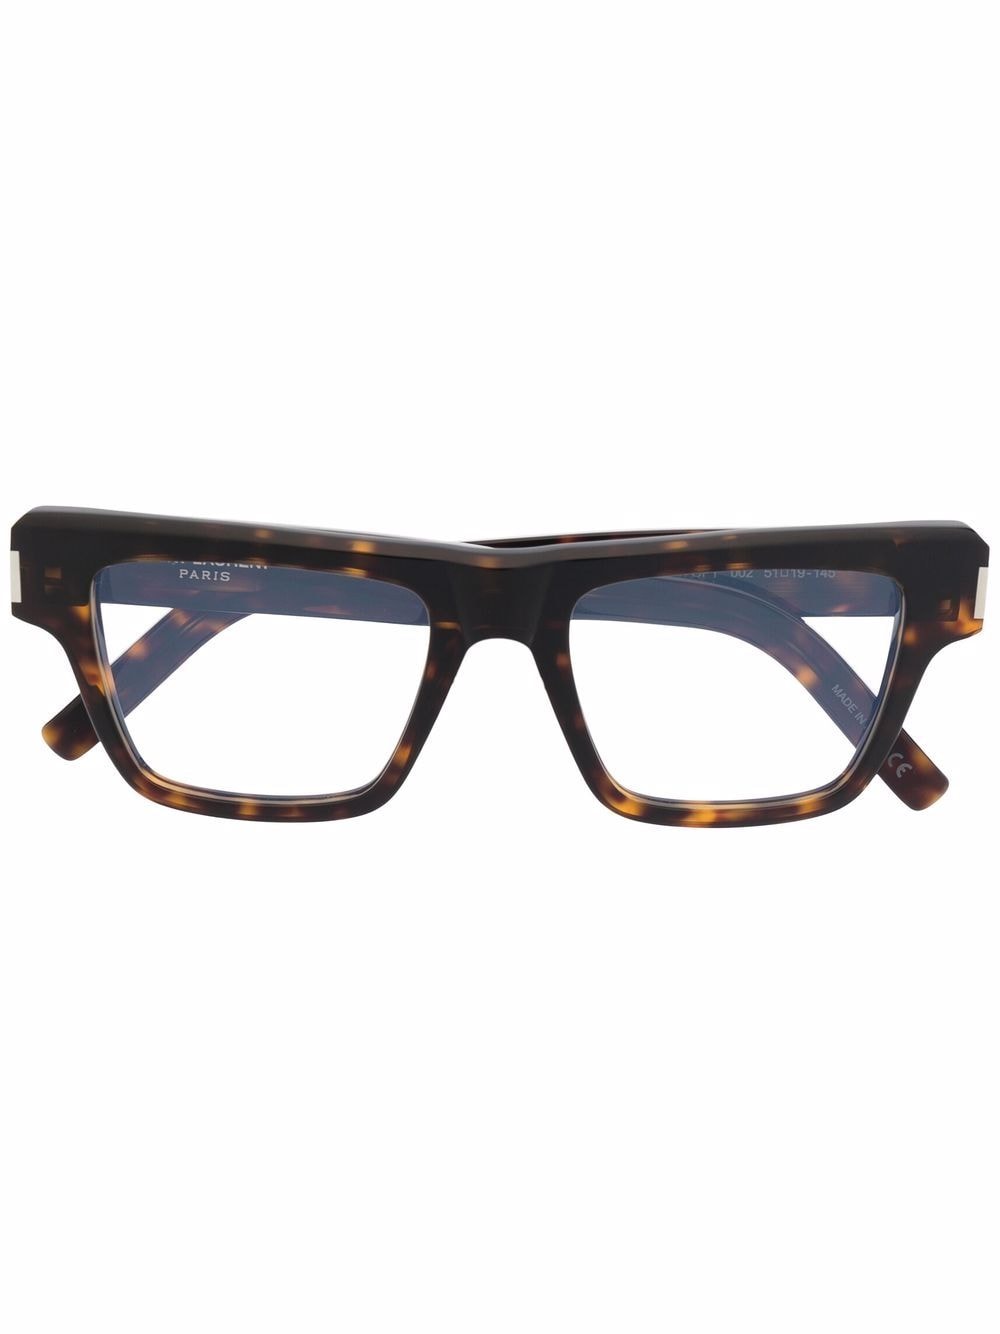 Image 1 of Saint Laurent Eyewear square frame tortoise glasses